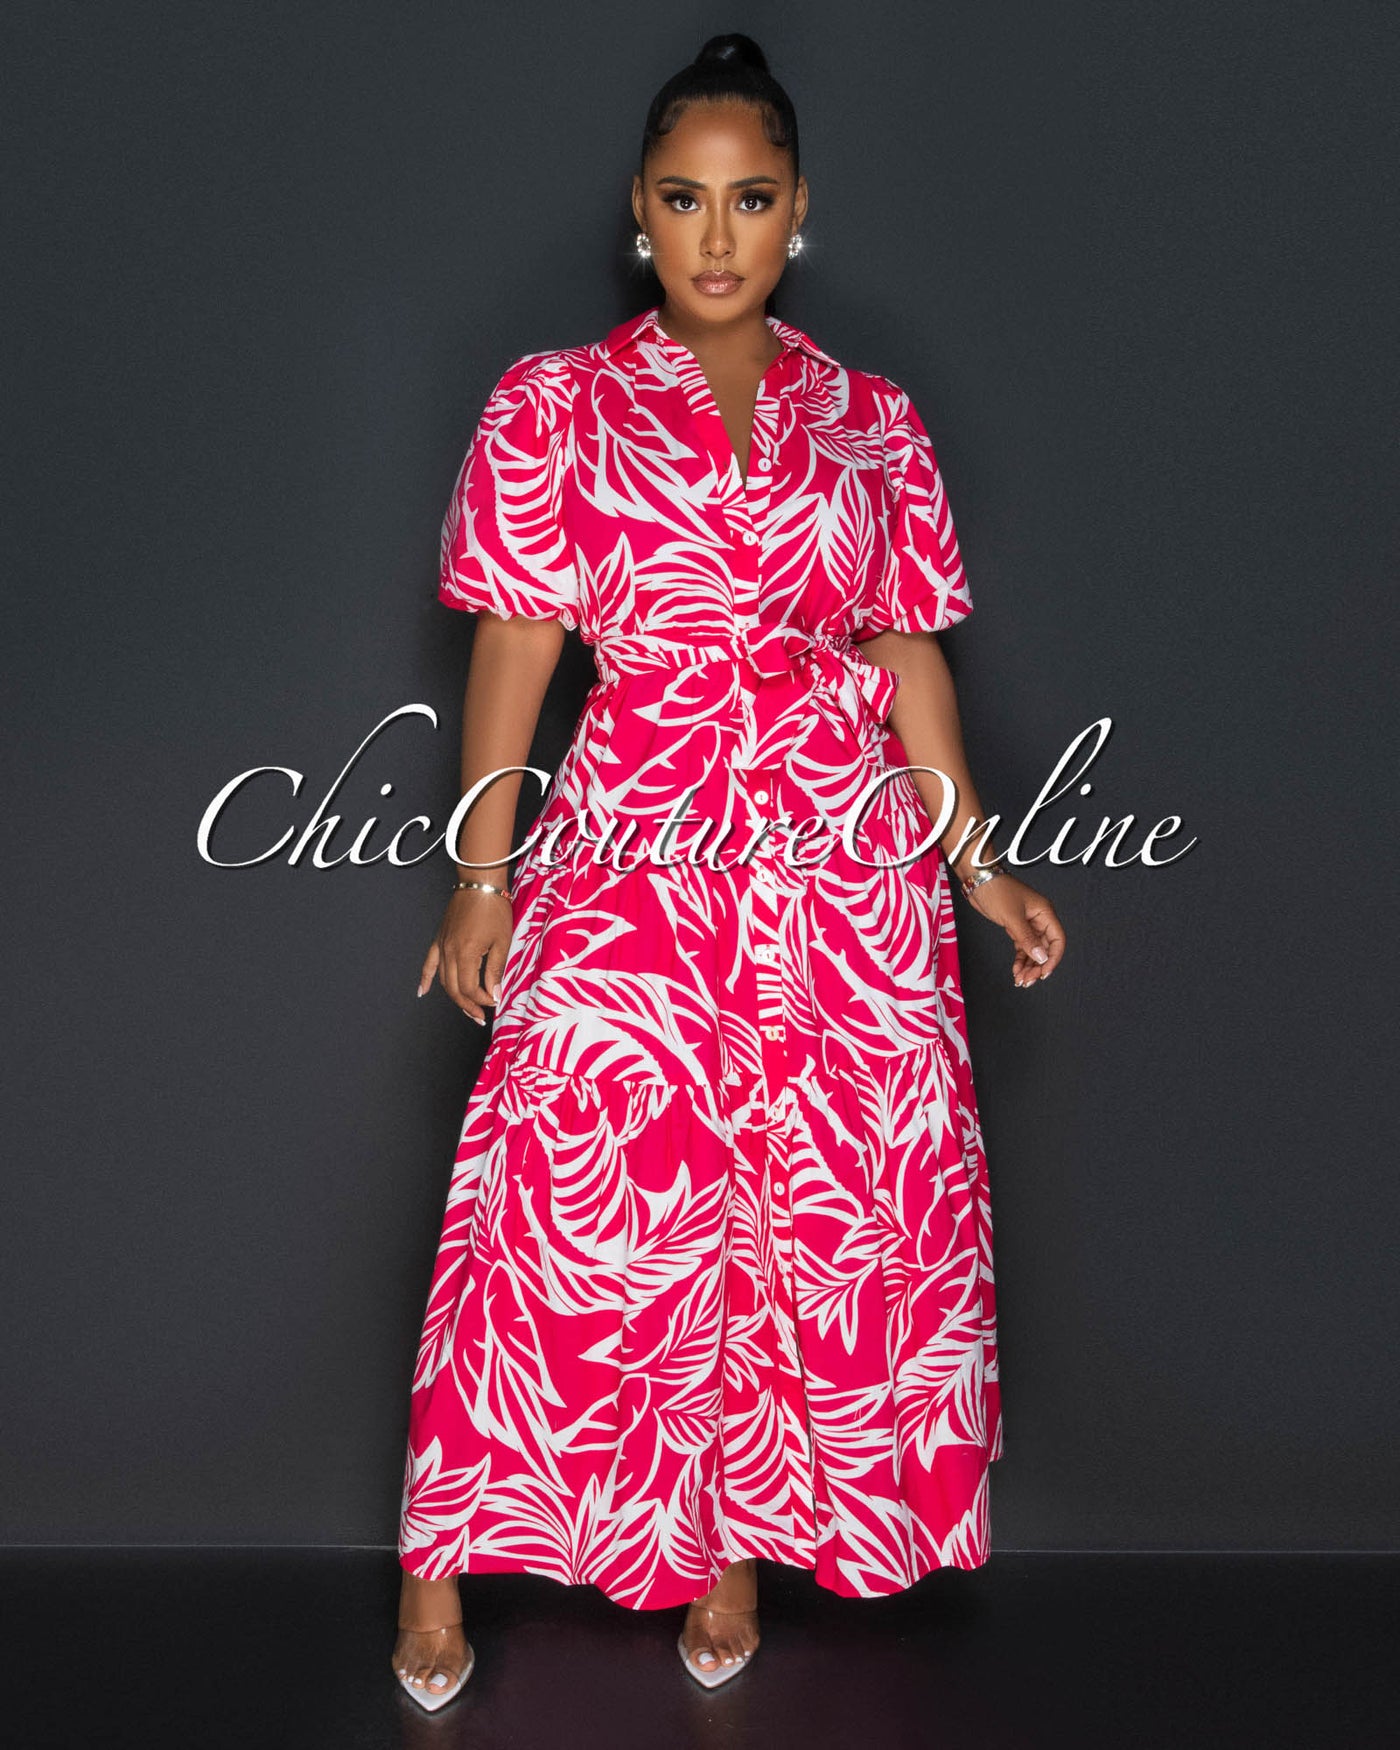 Duna Coral White Floral Print Maxi Dress